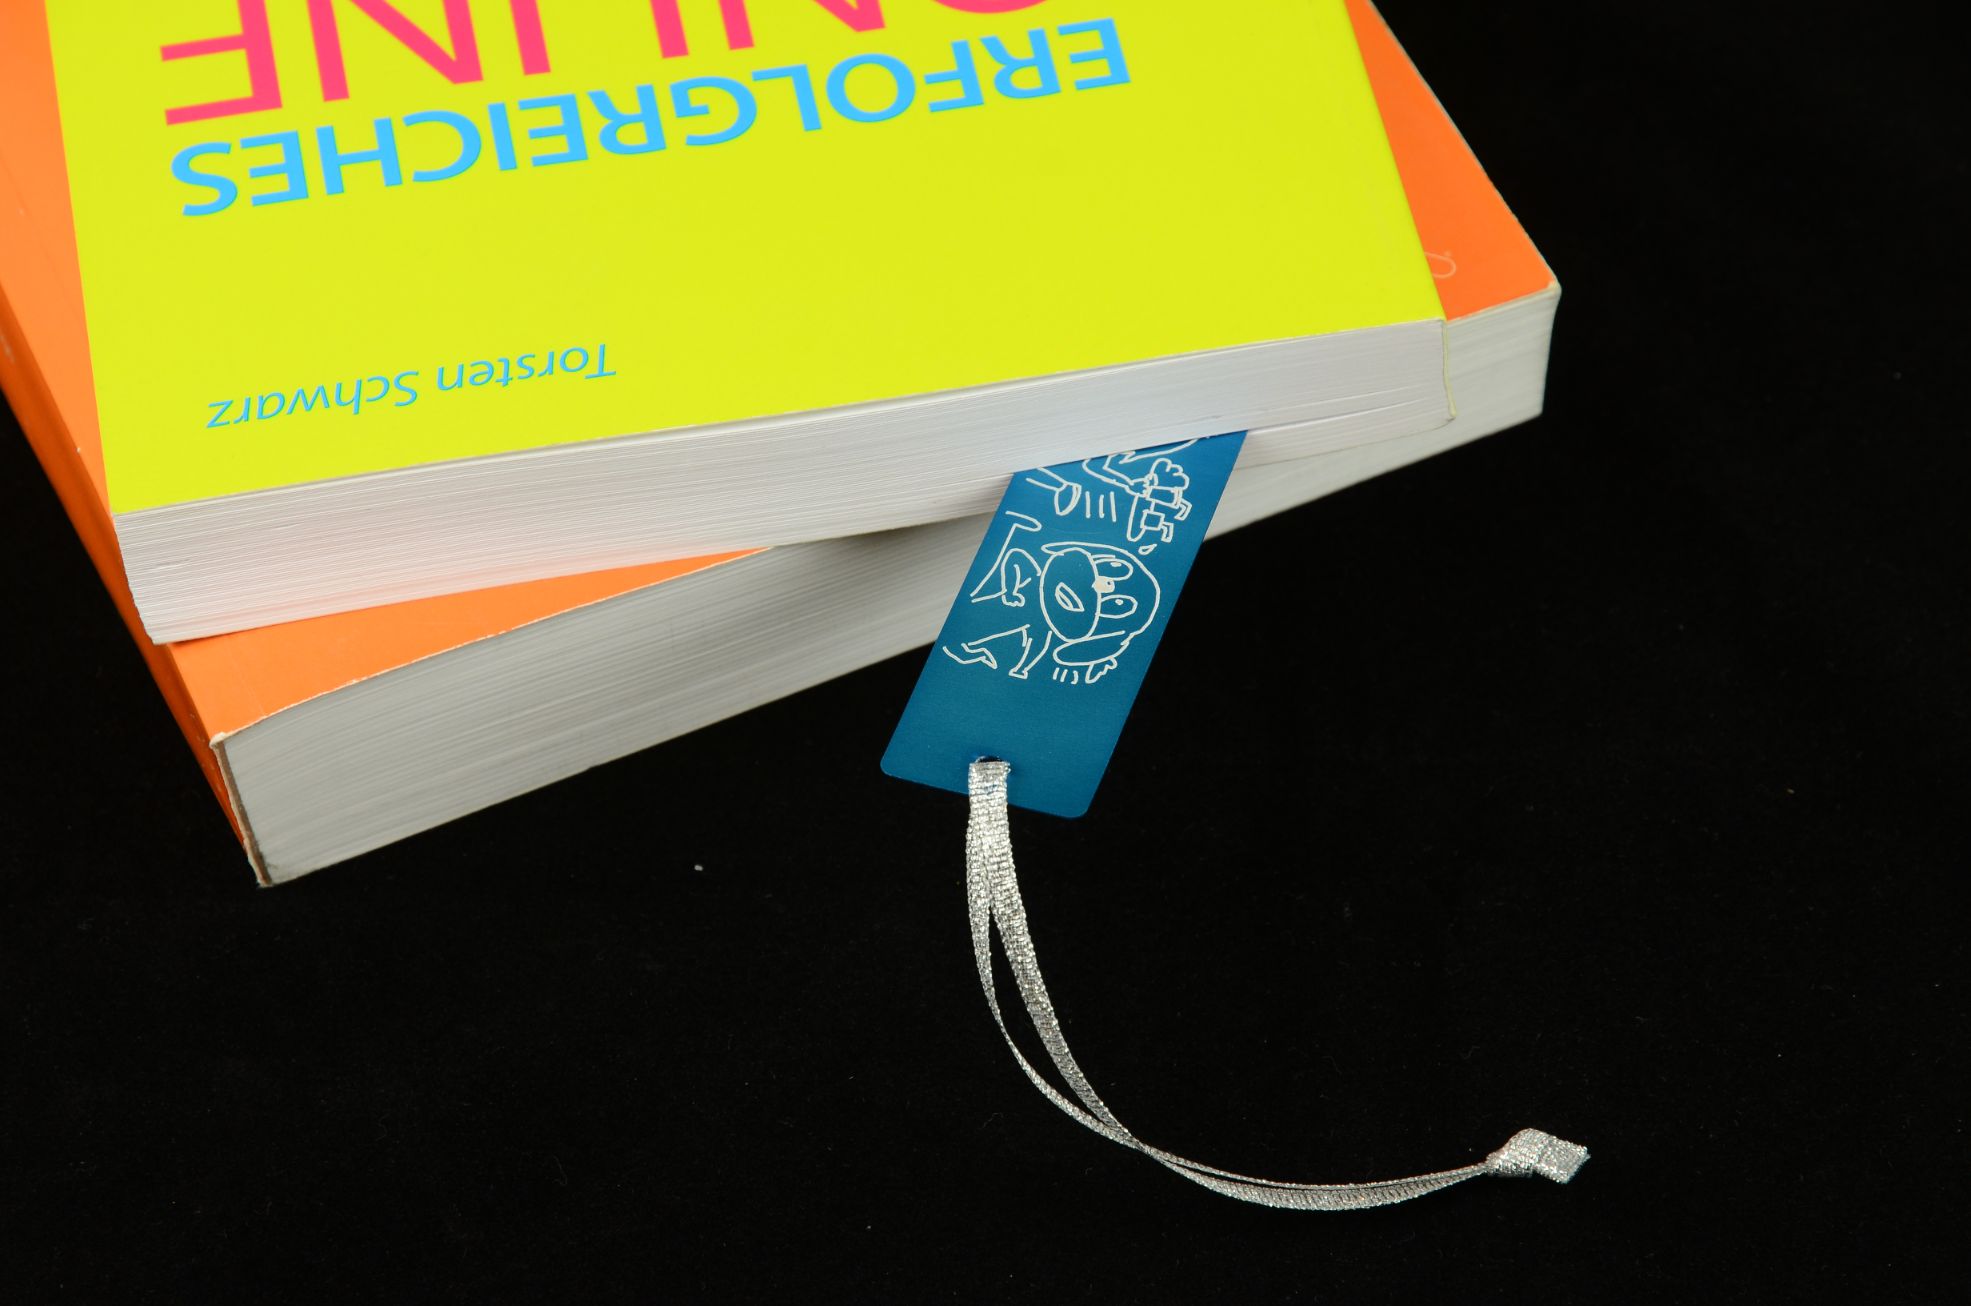 mkt a anodized aluminum bookmark